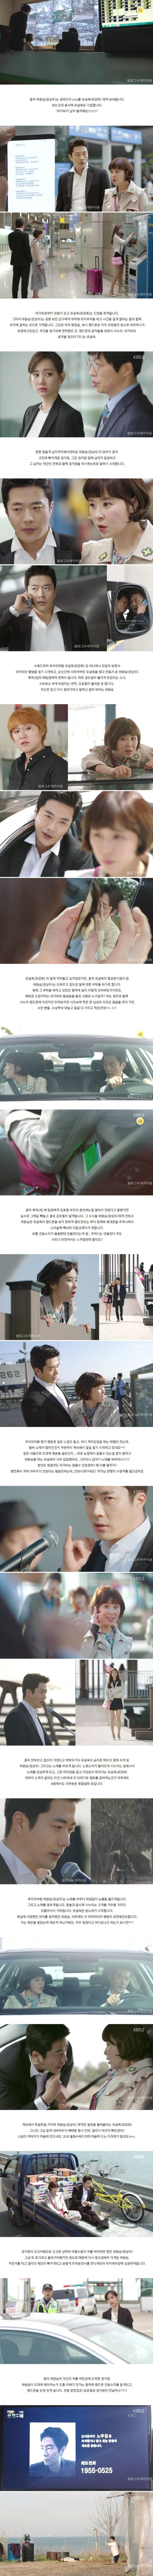 episode 7 captures for the Korean drama 'Mystery Queen'